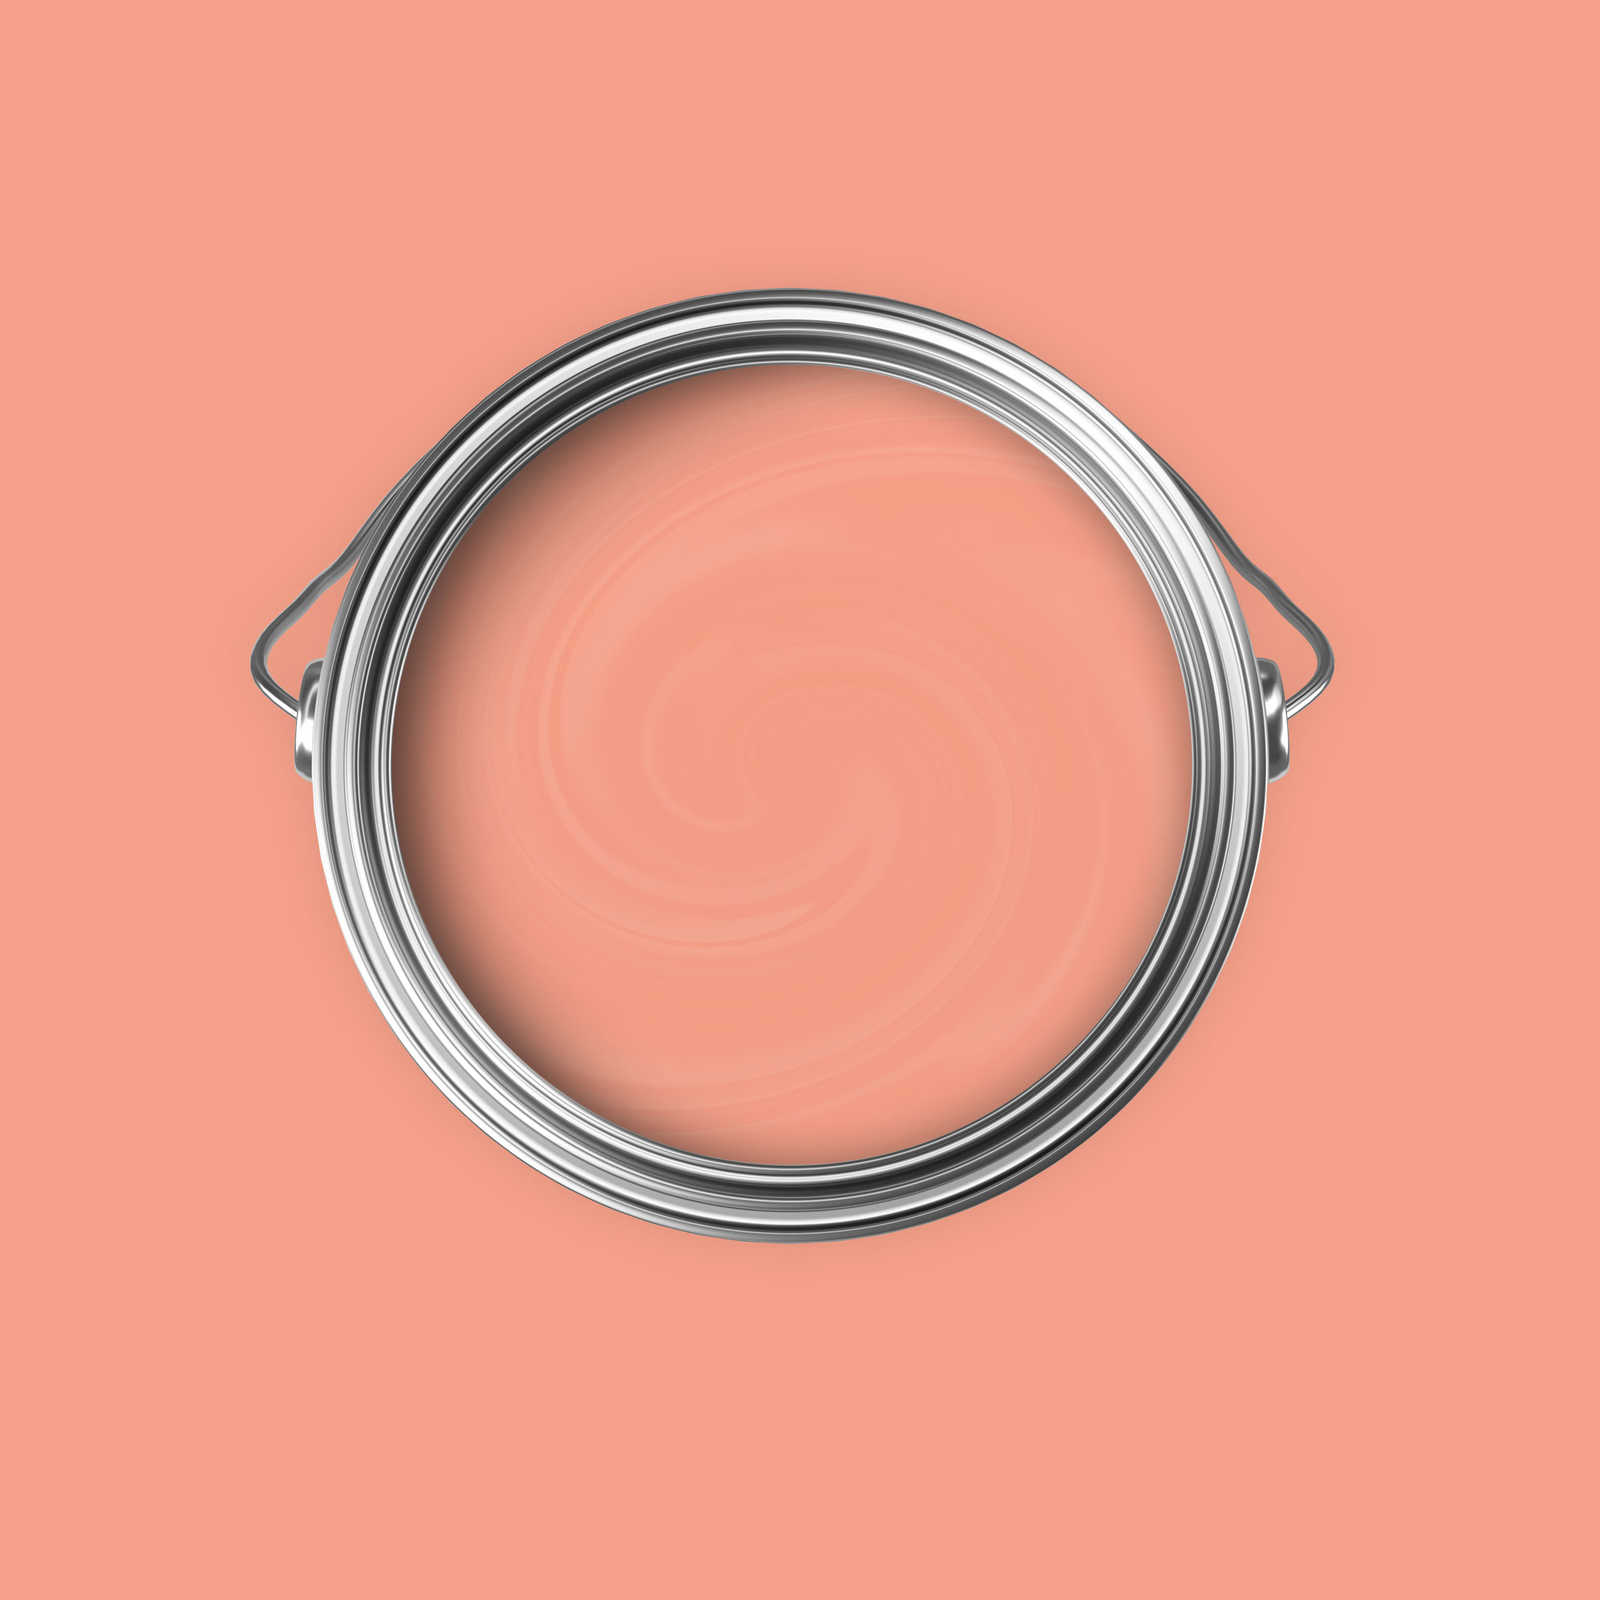             Premium Muurverf Harmonious Salmon »Active Apricot« NW914 – 5 liter
        